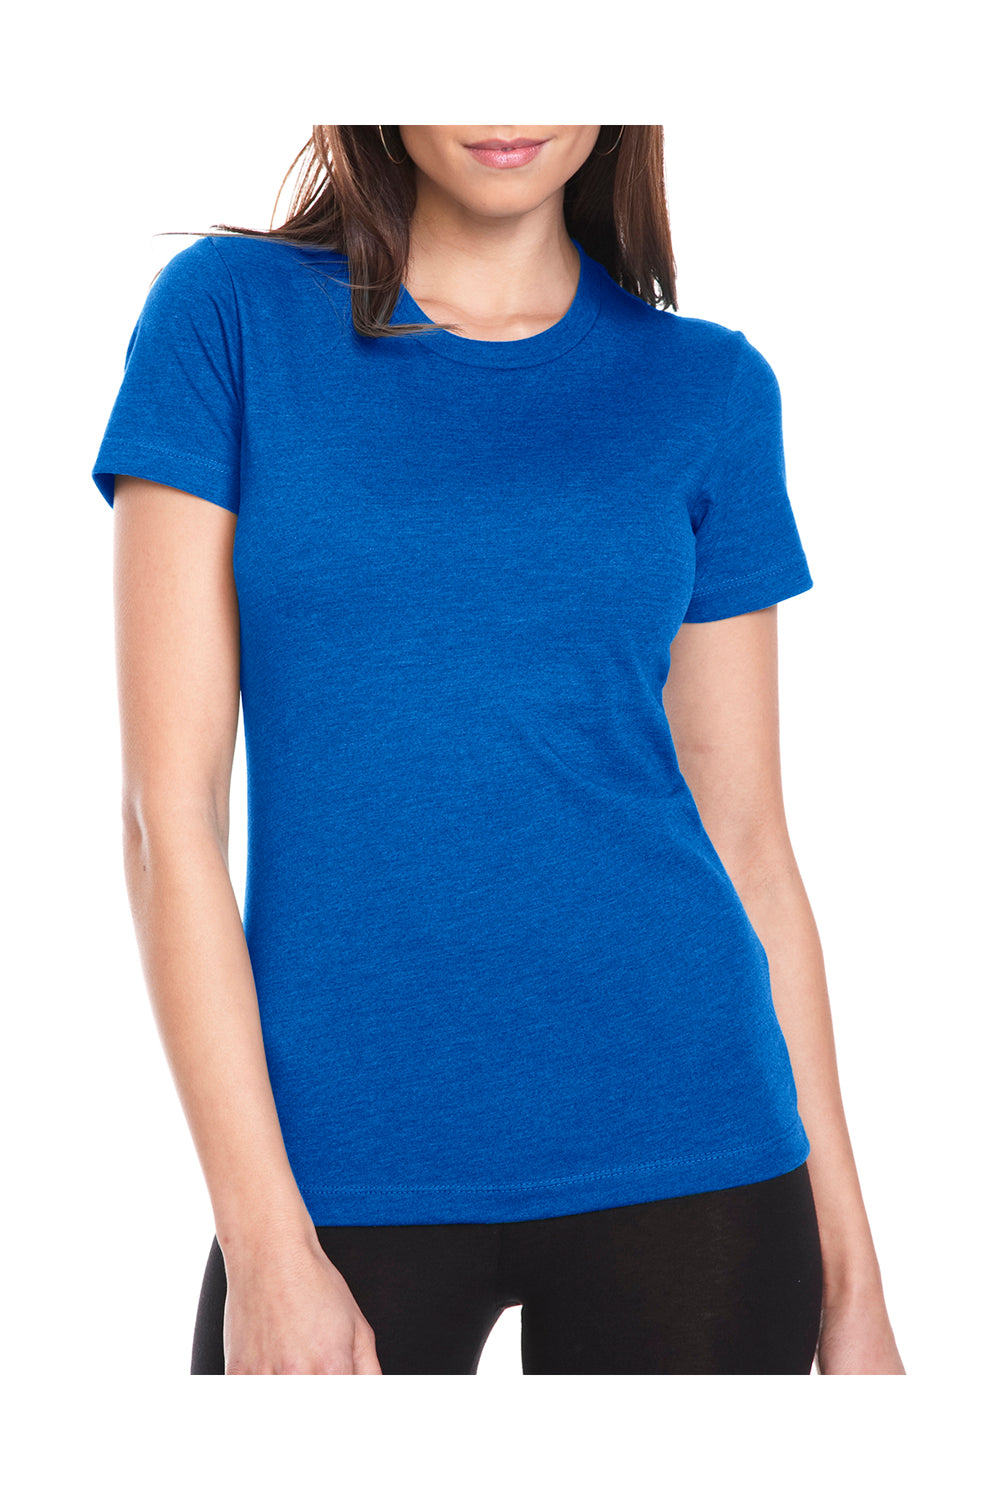 Next Level 6610 Womens CVC Jersey Short Sleeve Crewneck T-Shirt Royal Blue Front